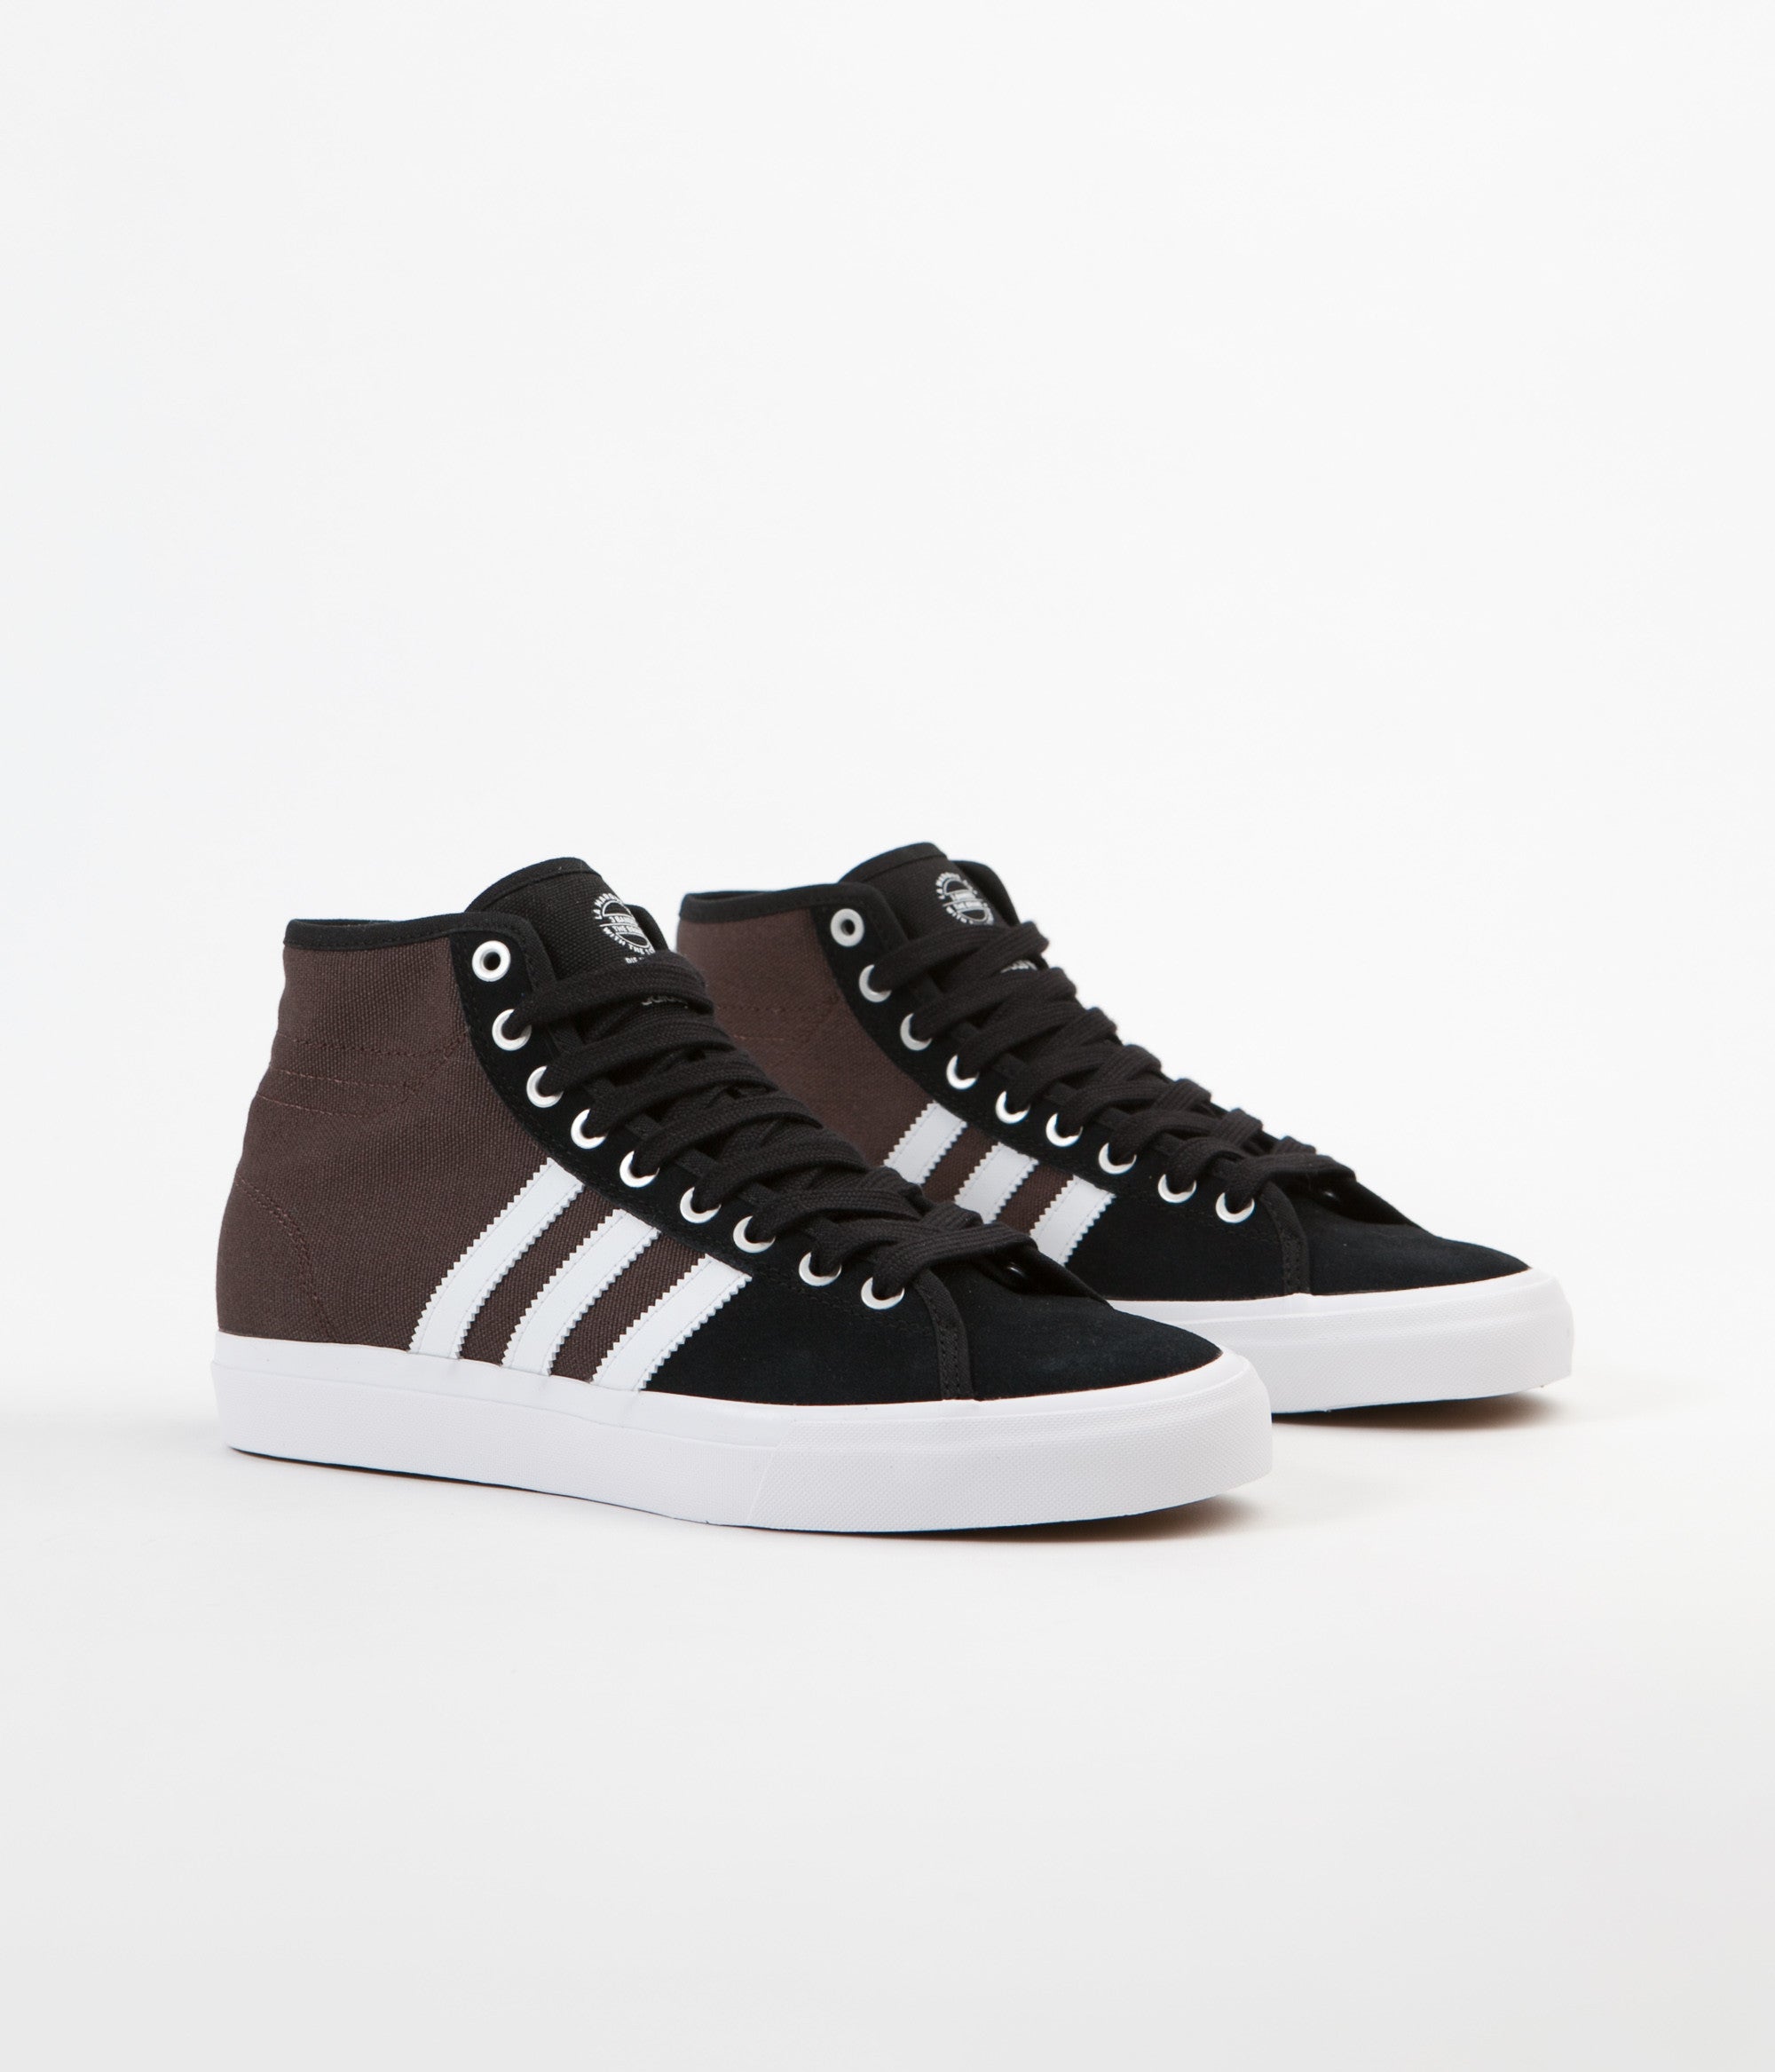 adidas matchcourt rx white & black shoes